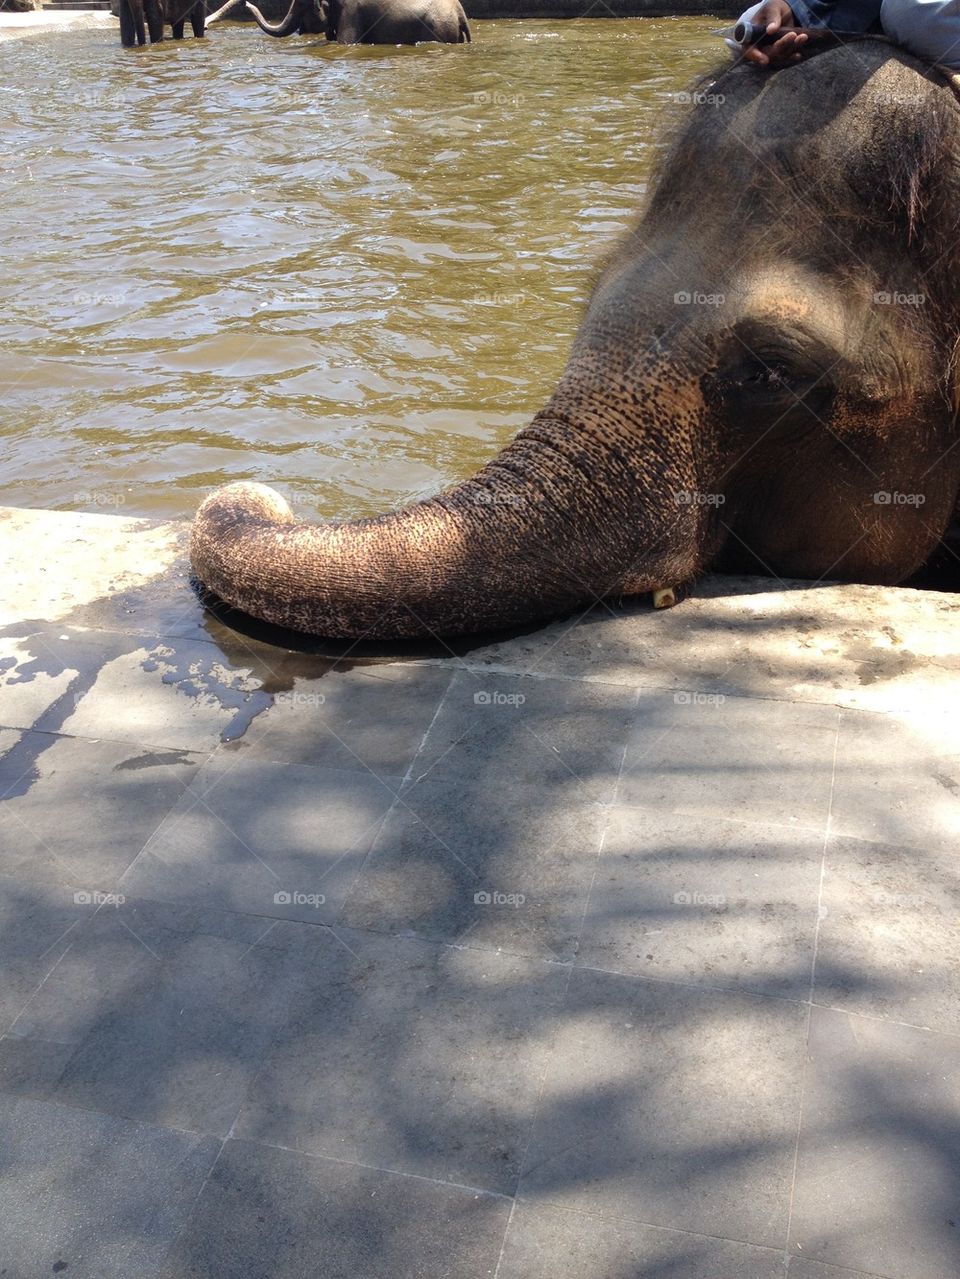 Elephant chilling 